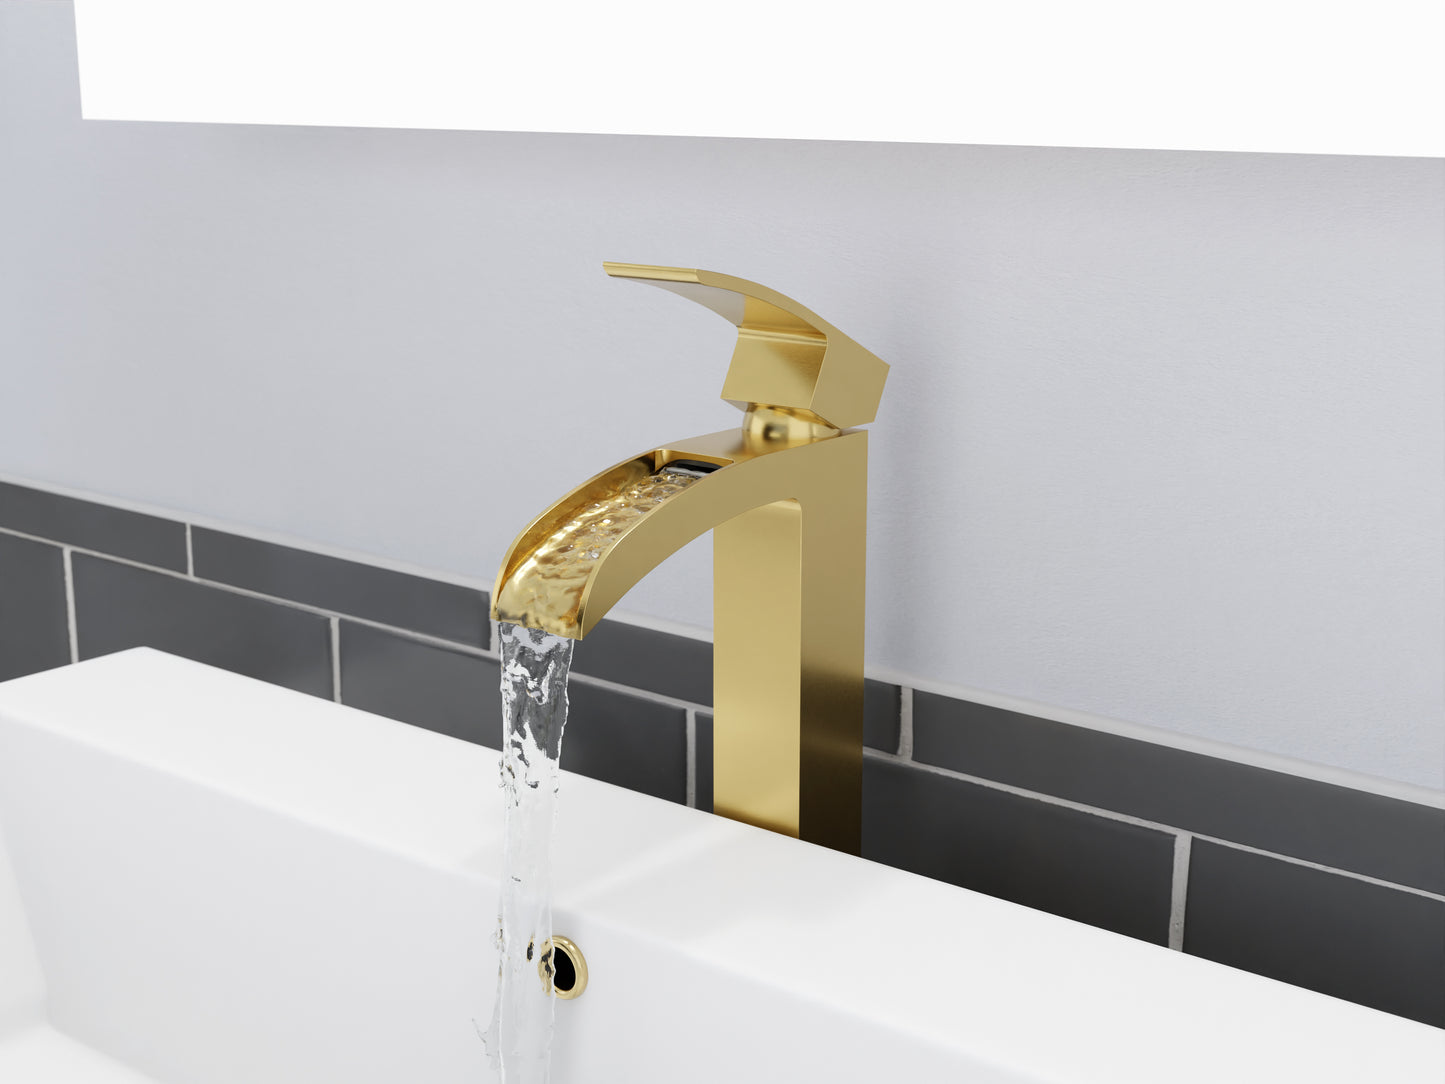 Key Series Single Hole Single-Handle Vessel Bathroom Faucet